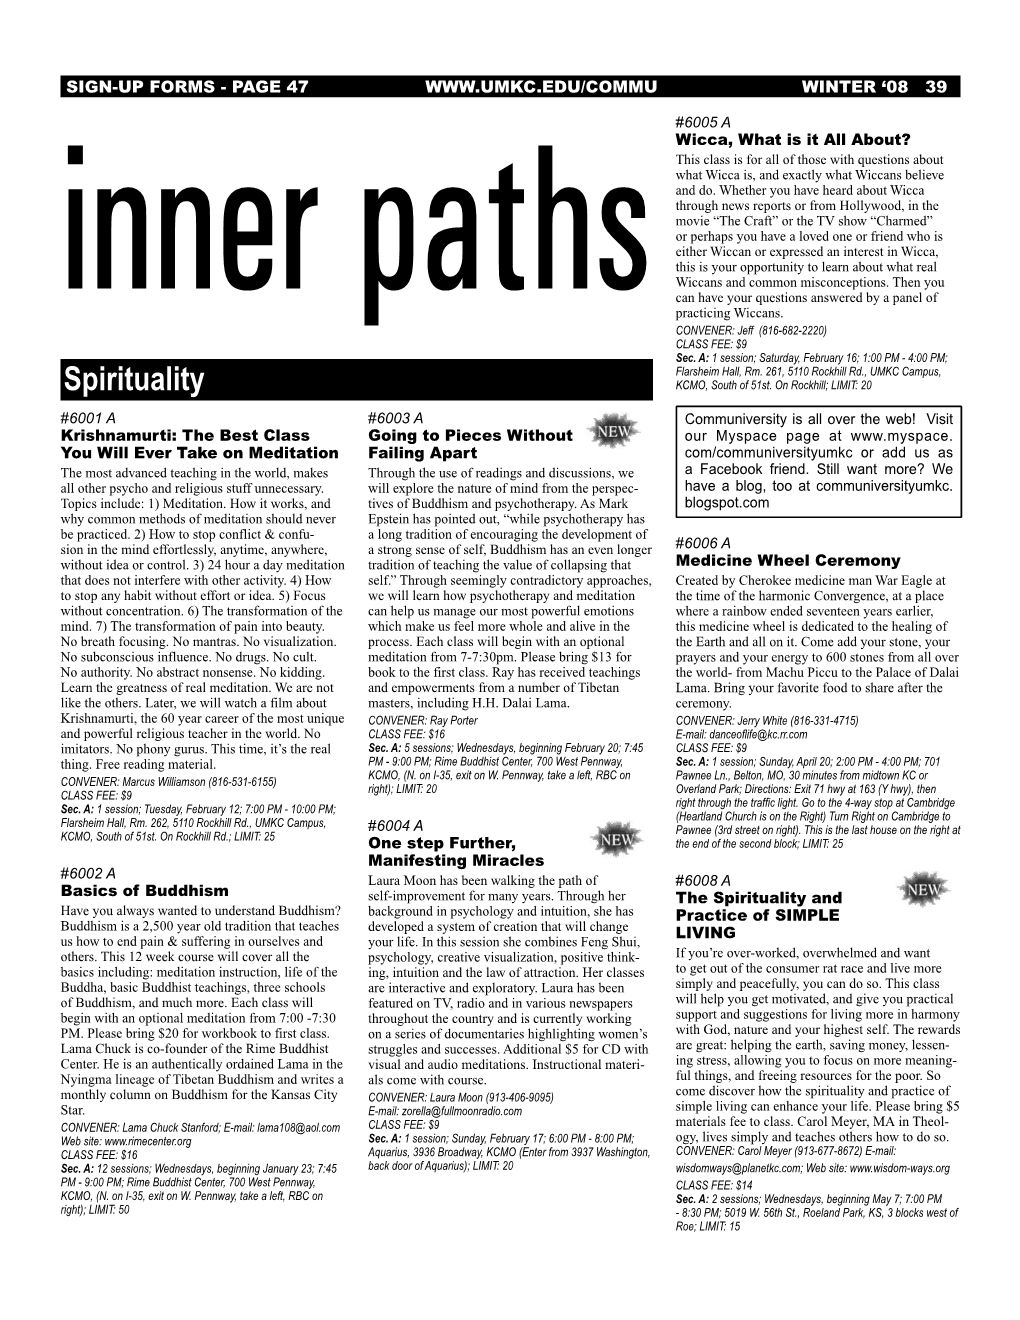 Inner Paths CONVENER: Jeff (816-682-2220) CLASS FEE: $9 Sec